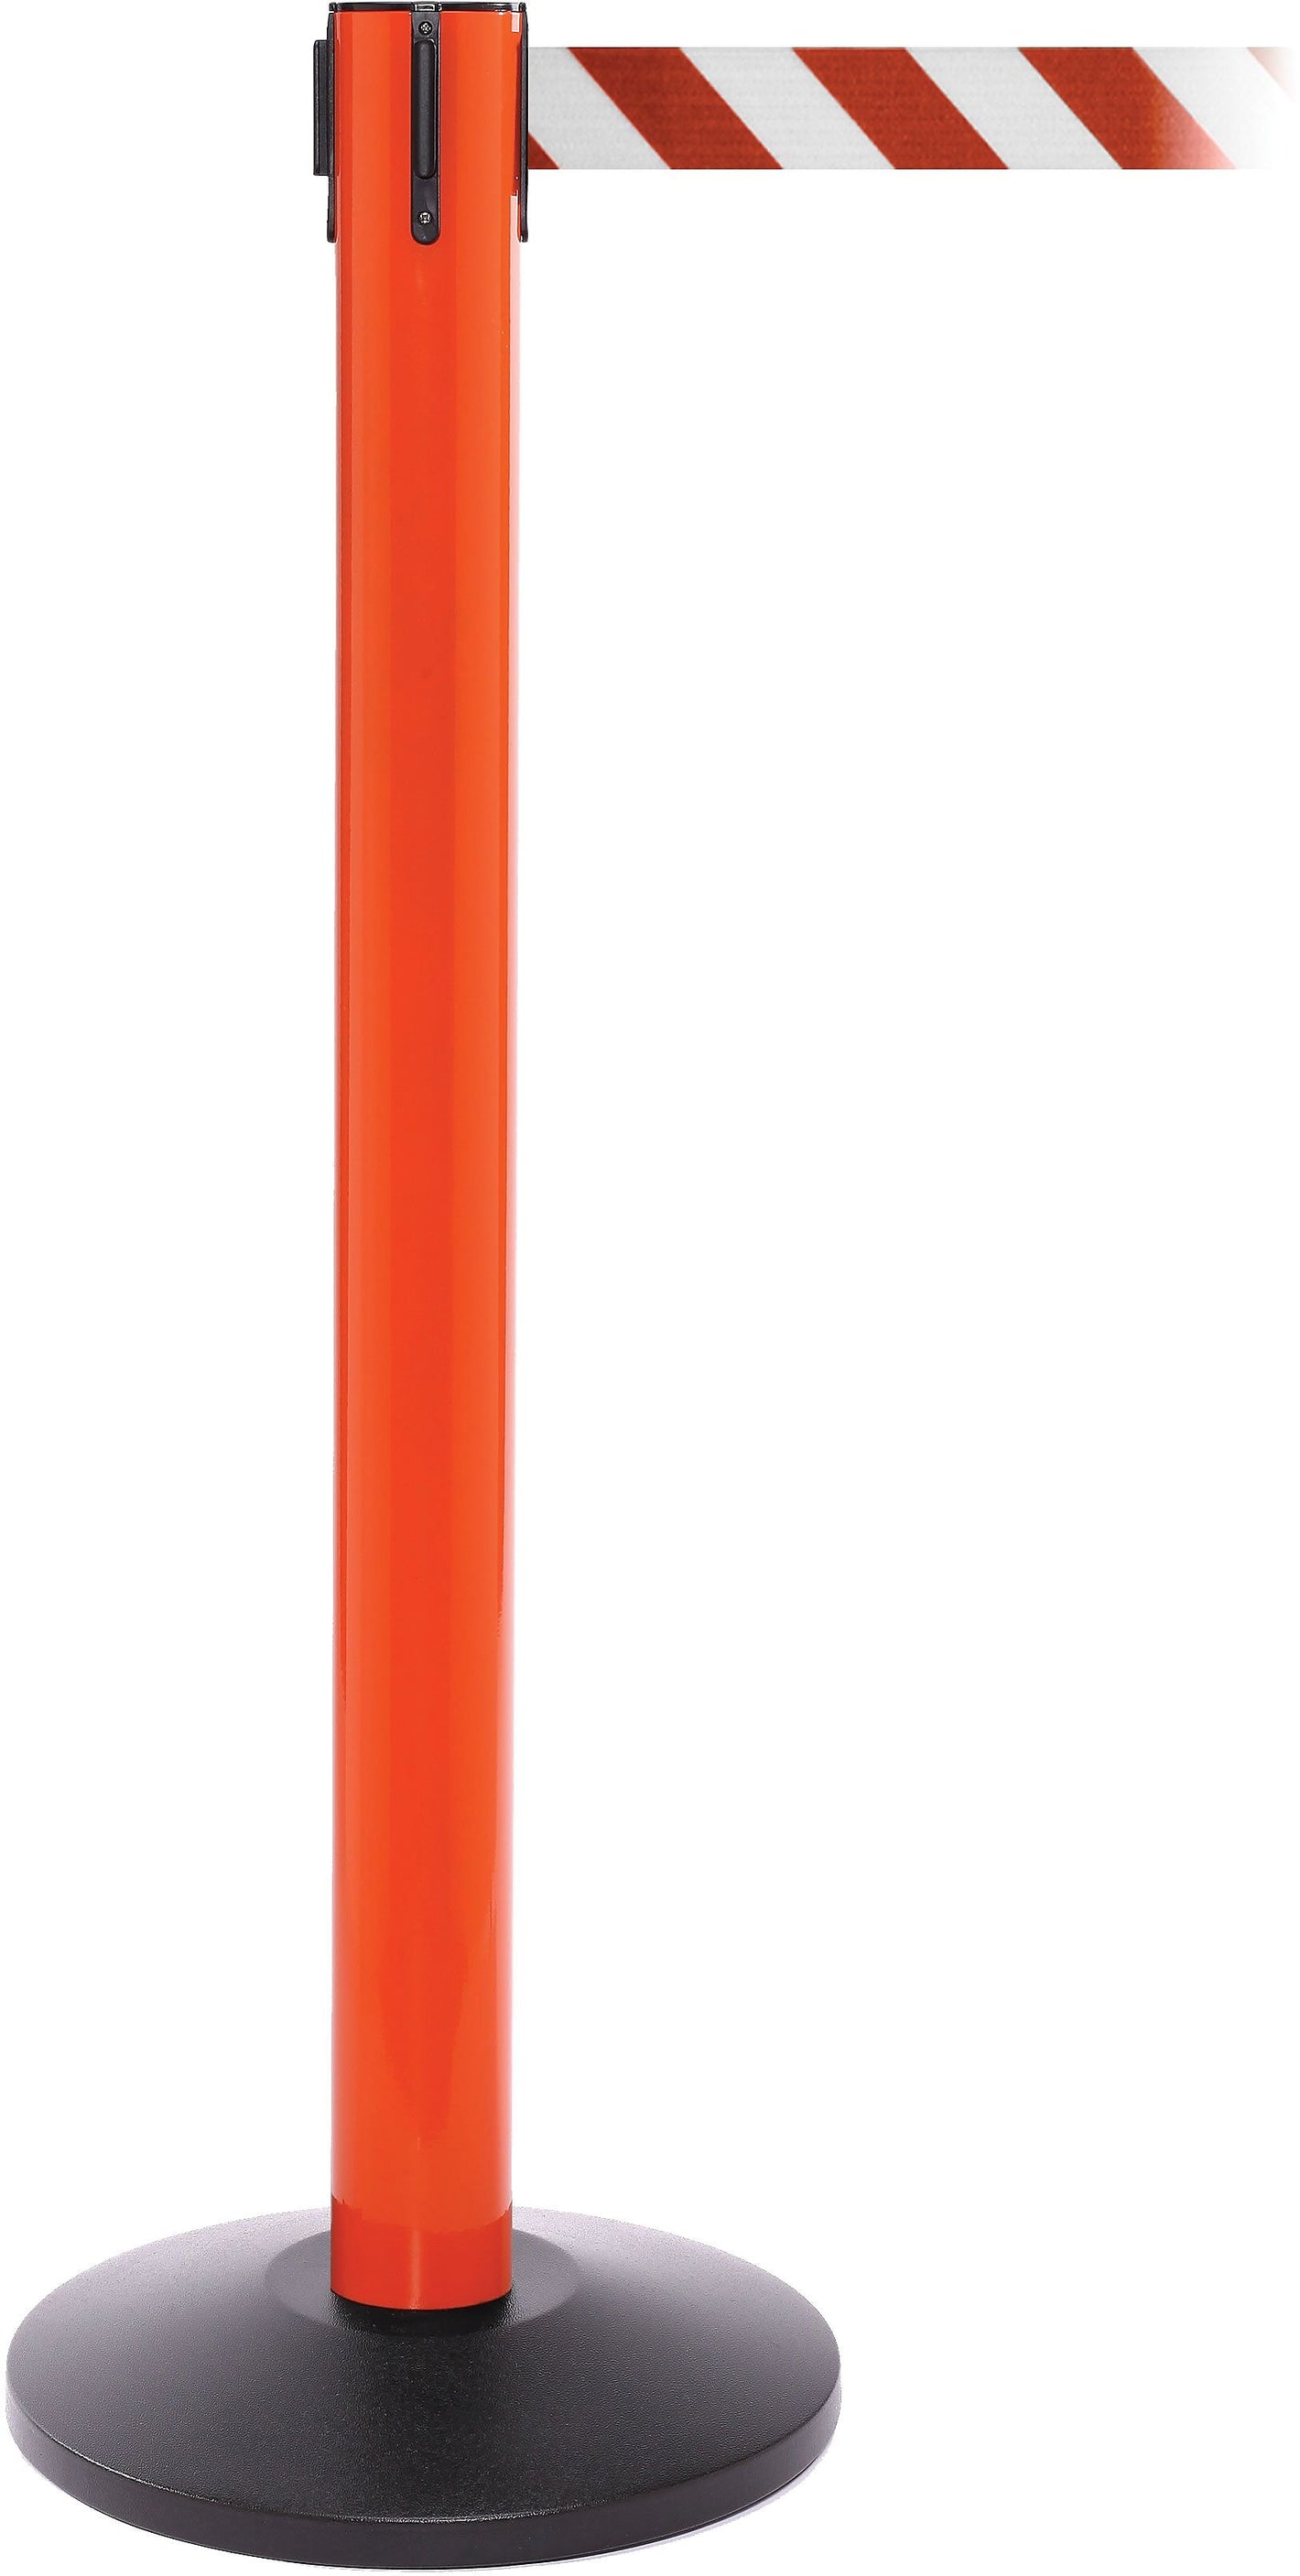 SafetyPro 300 Orange Retractable Belt Barrier with 16' Red/White Belt